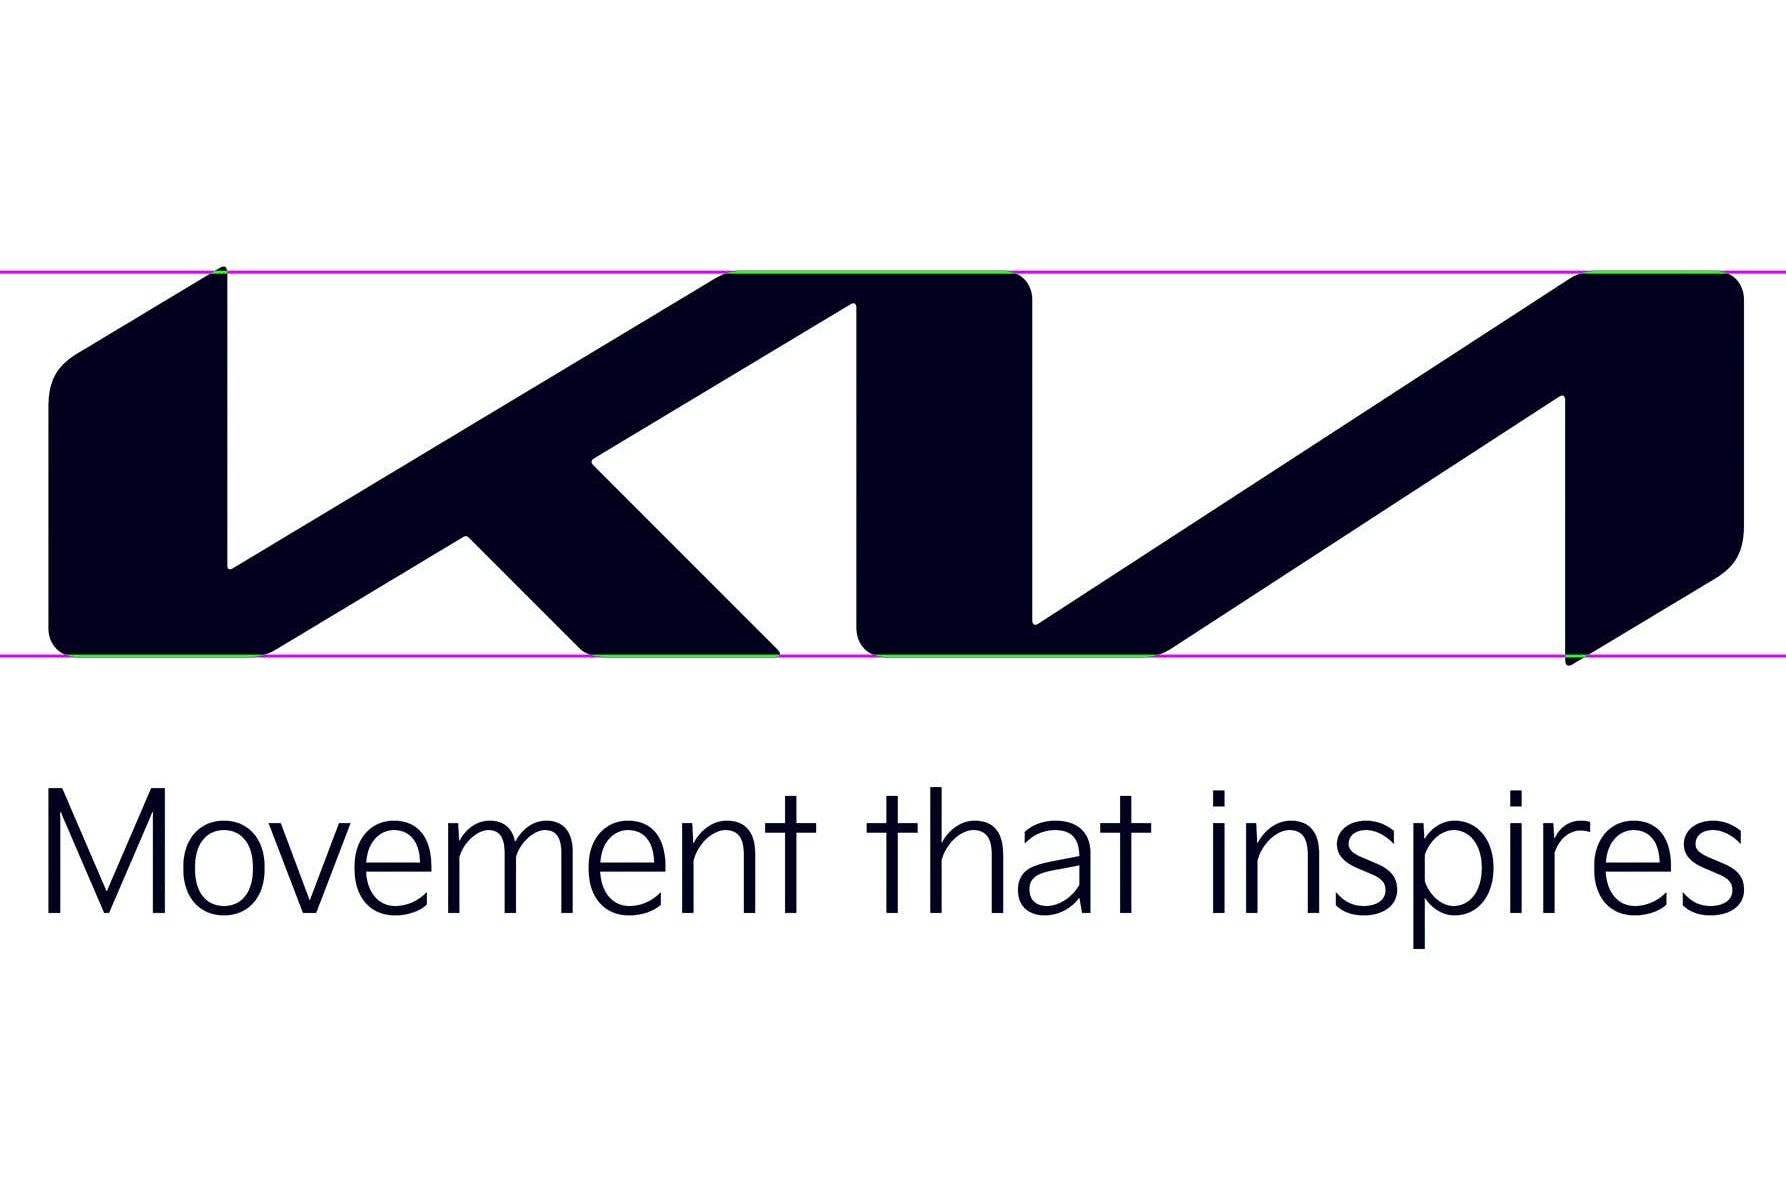 Novo logotipo da Kia